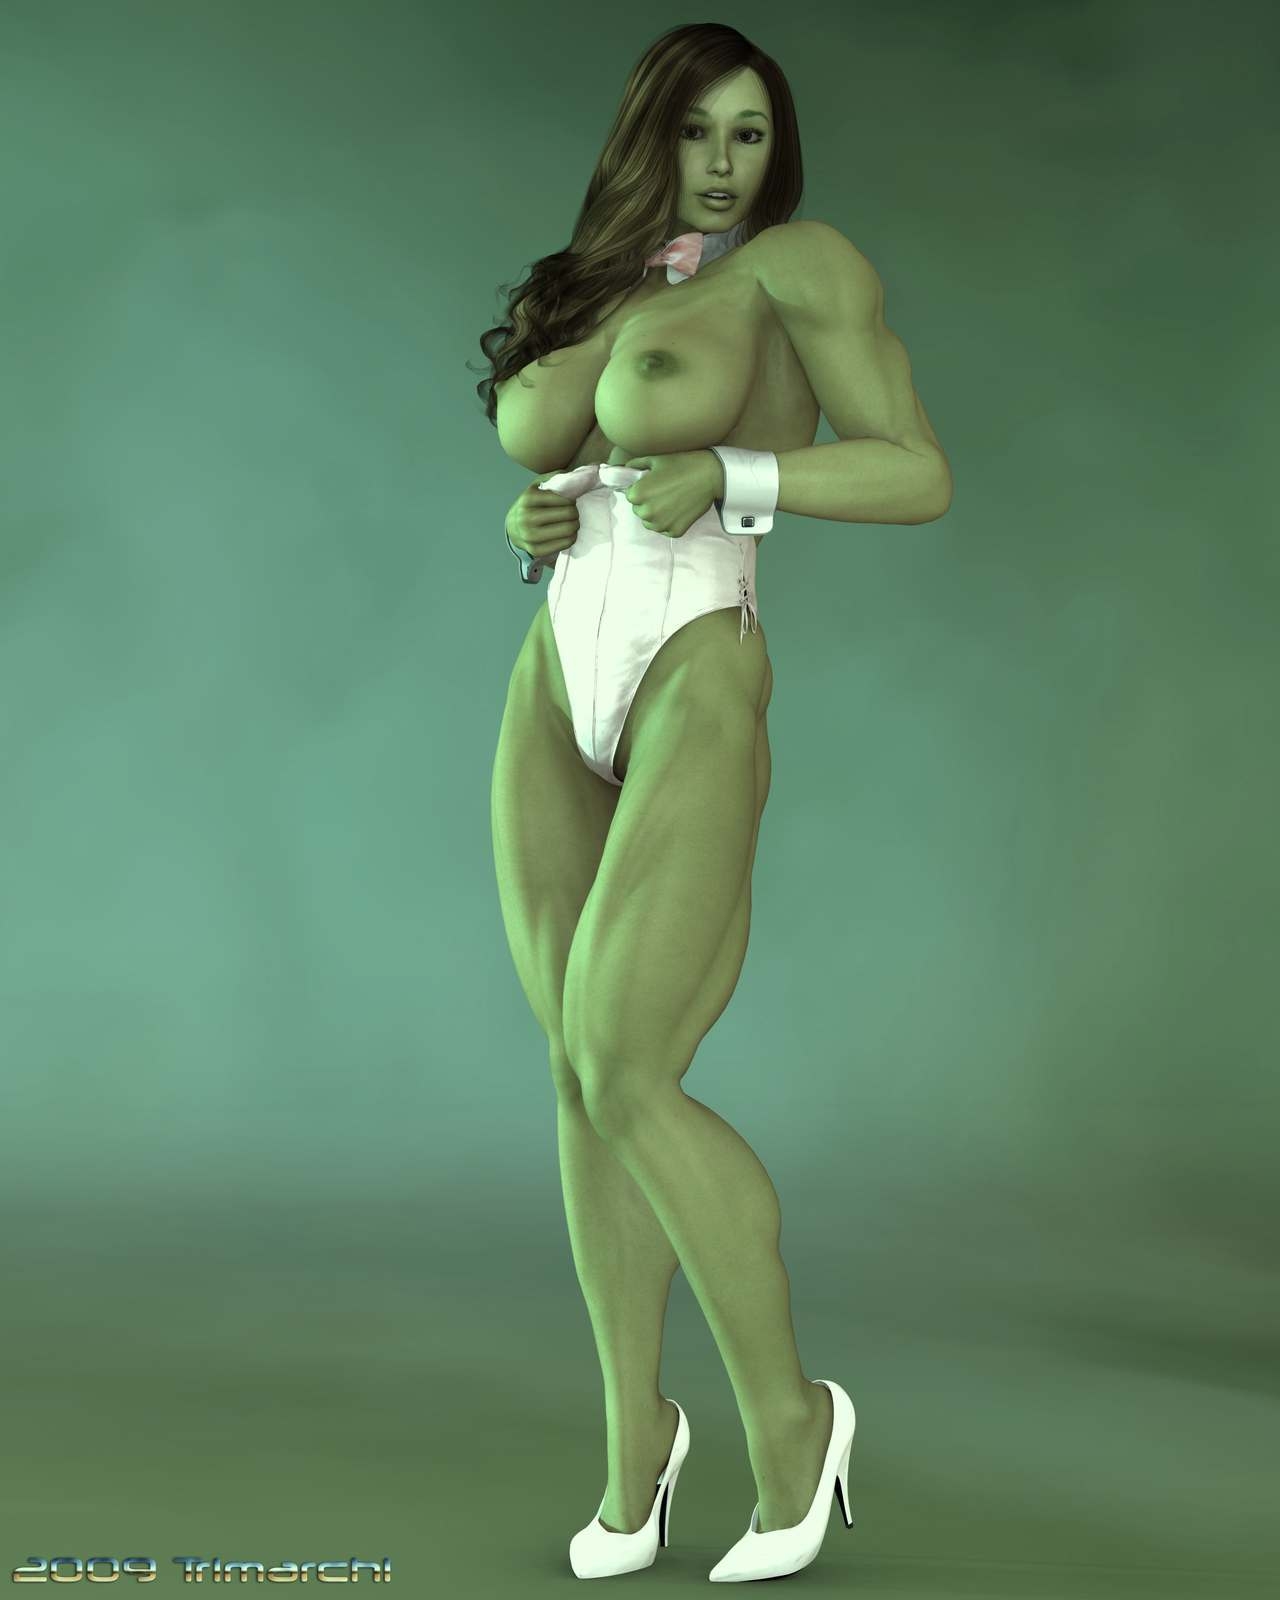 Marvel - She-Hulk Compilation 34